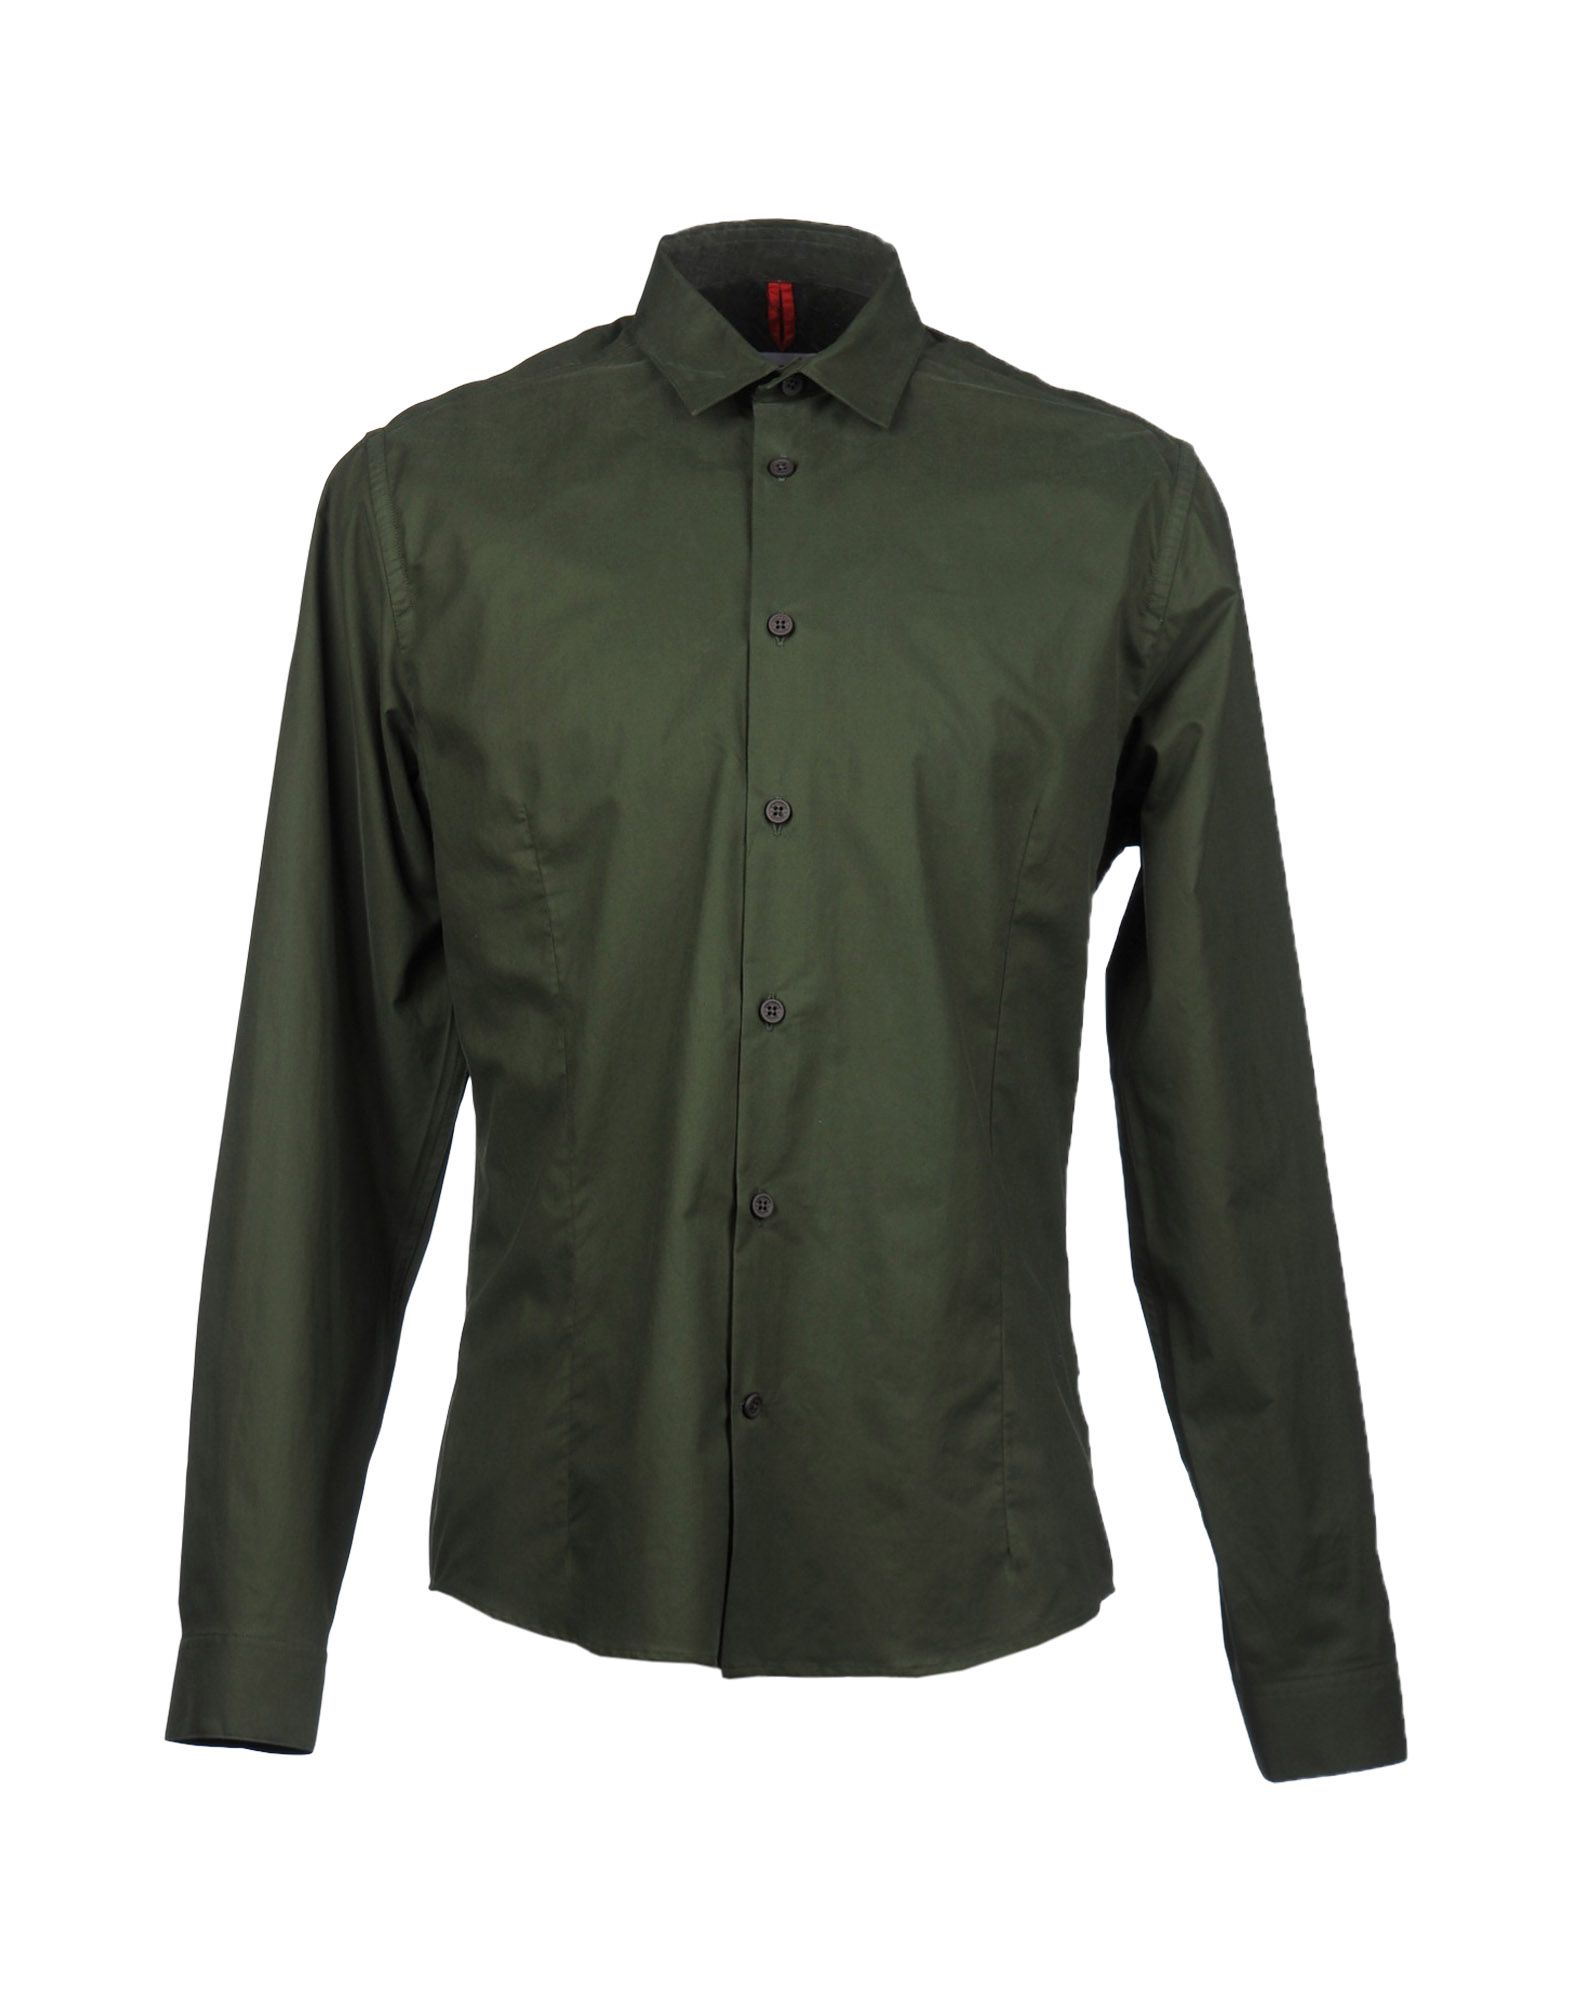 Lyst - Orlebar Brown Long Sleeve Shirt in Green for Men